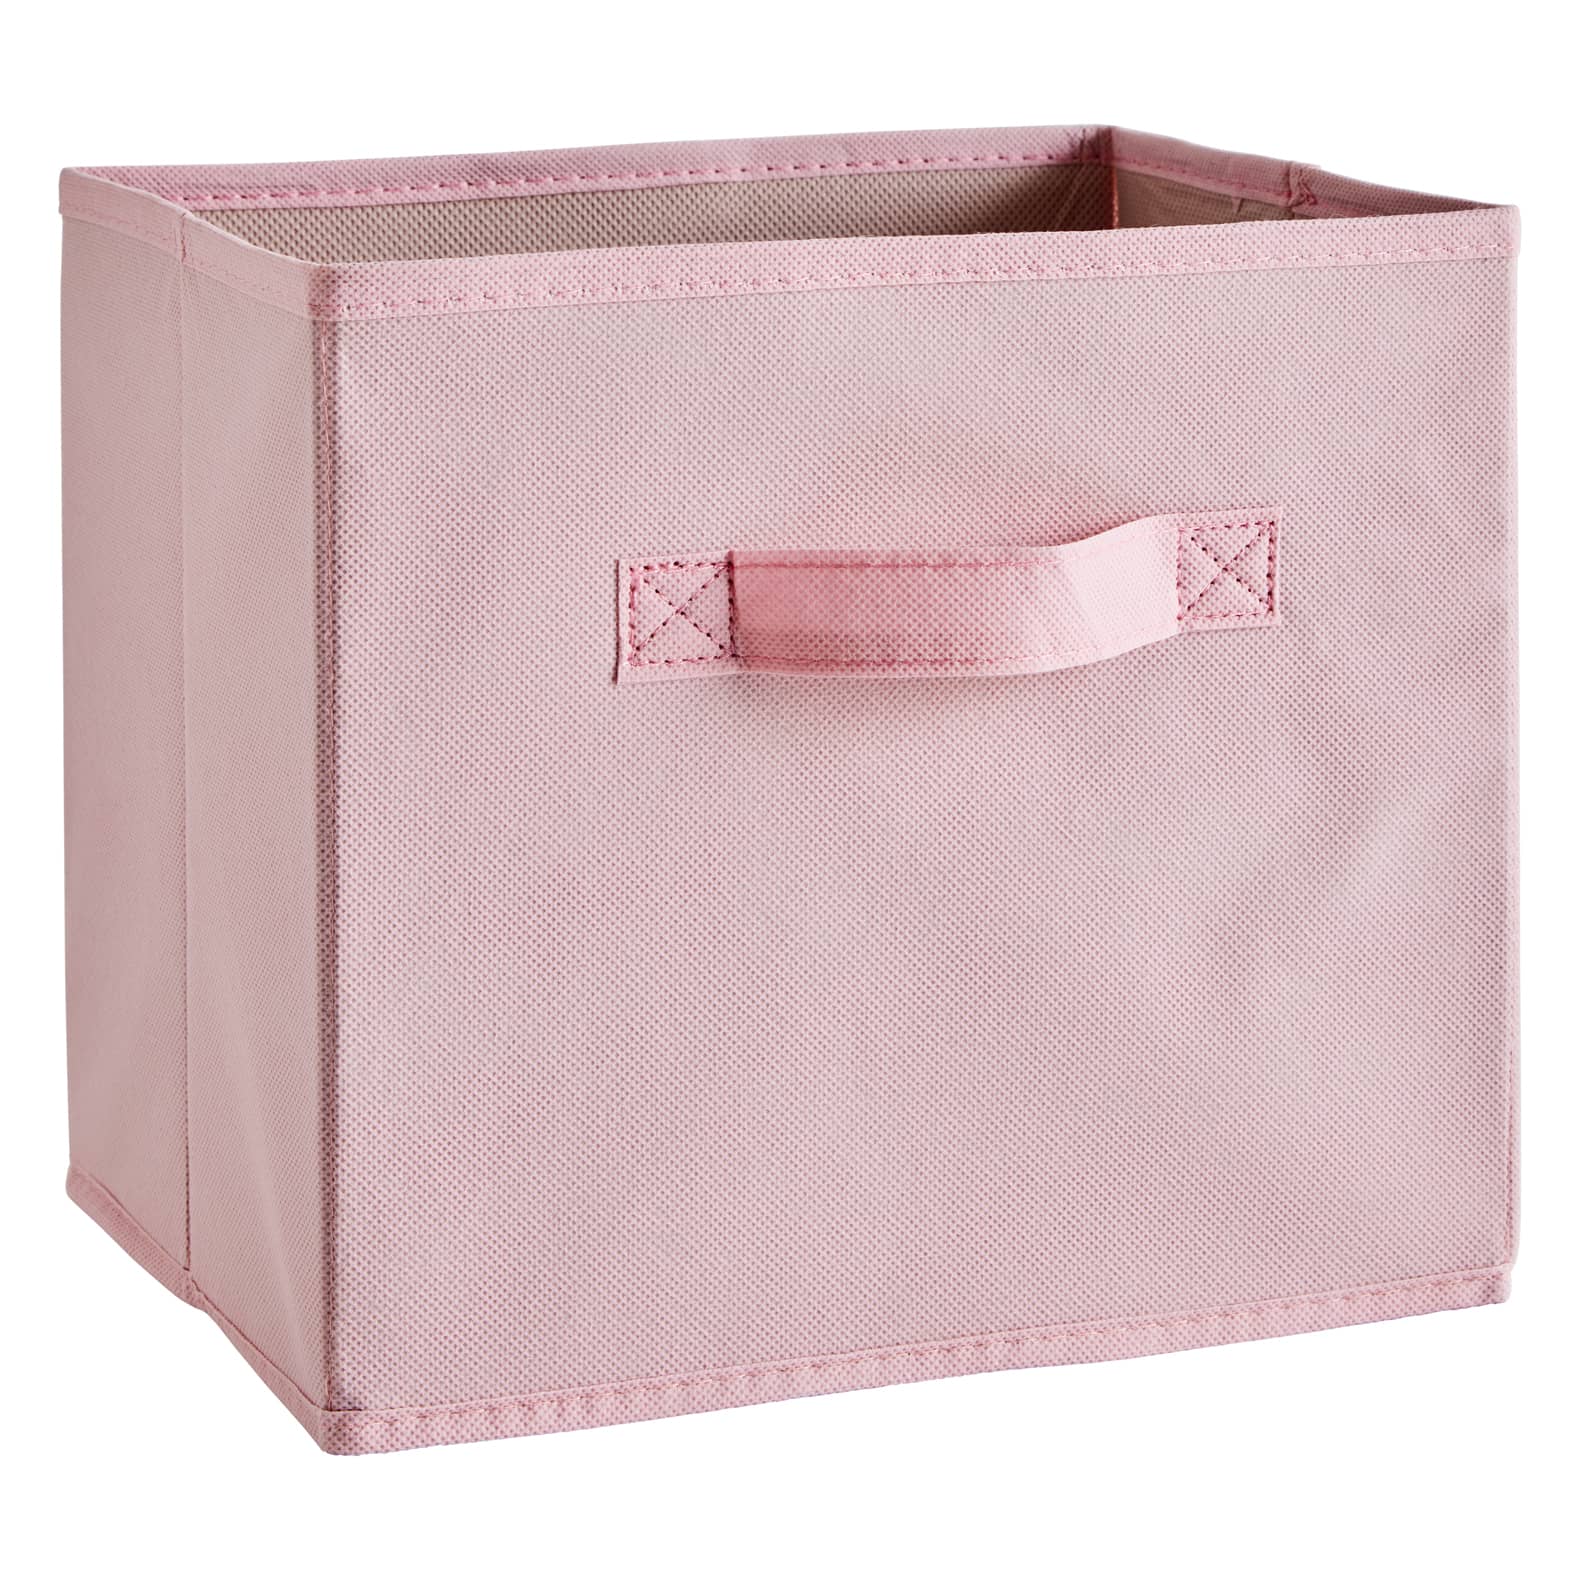 Cara fabric cube storage box - small - pink